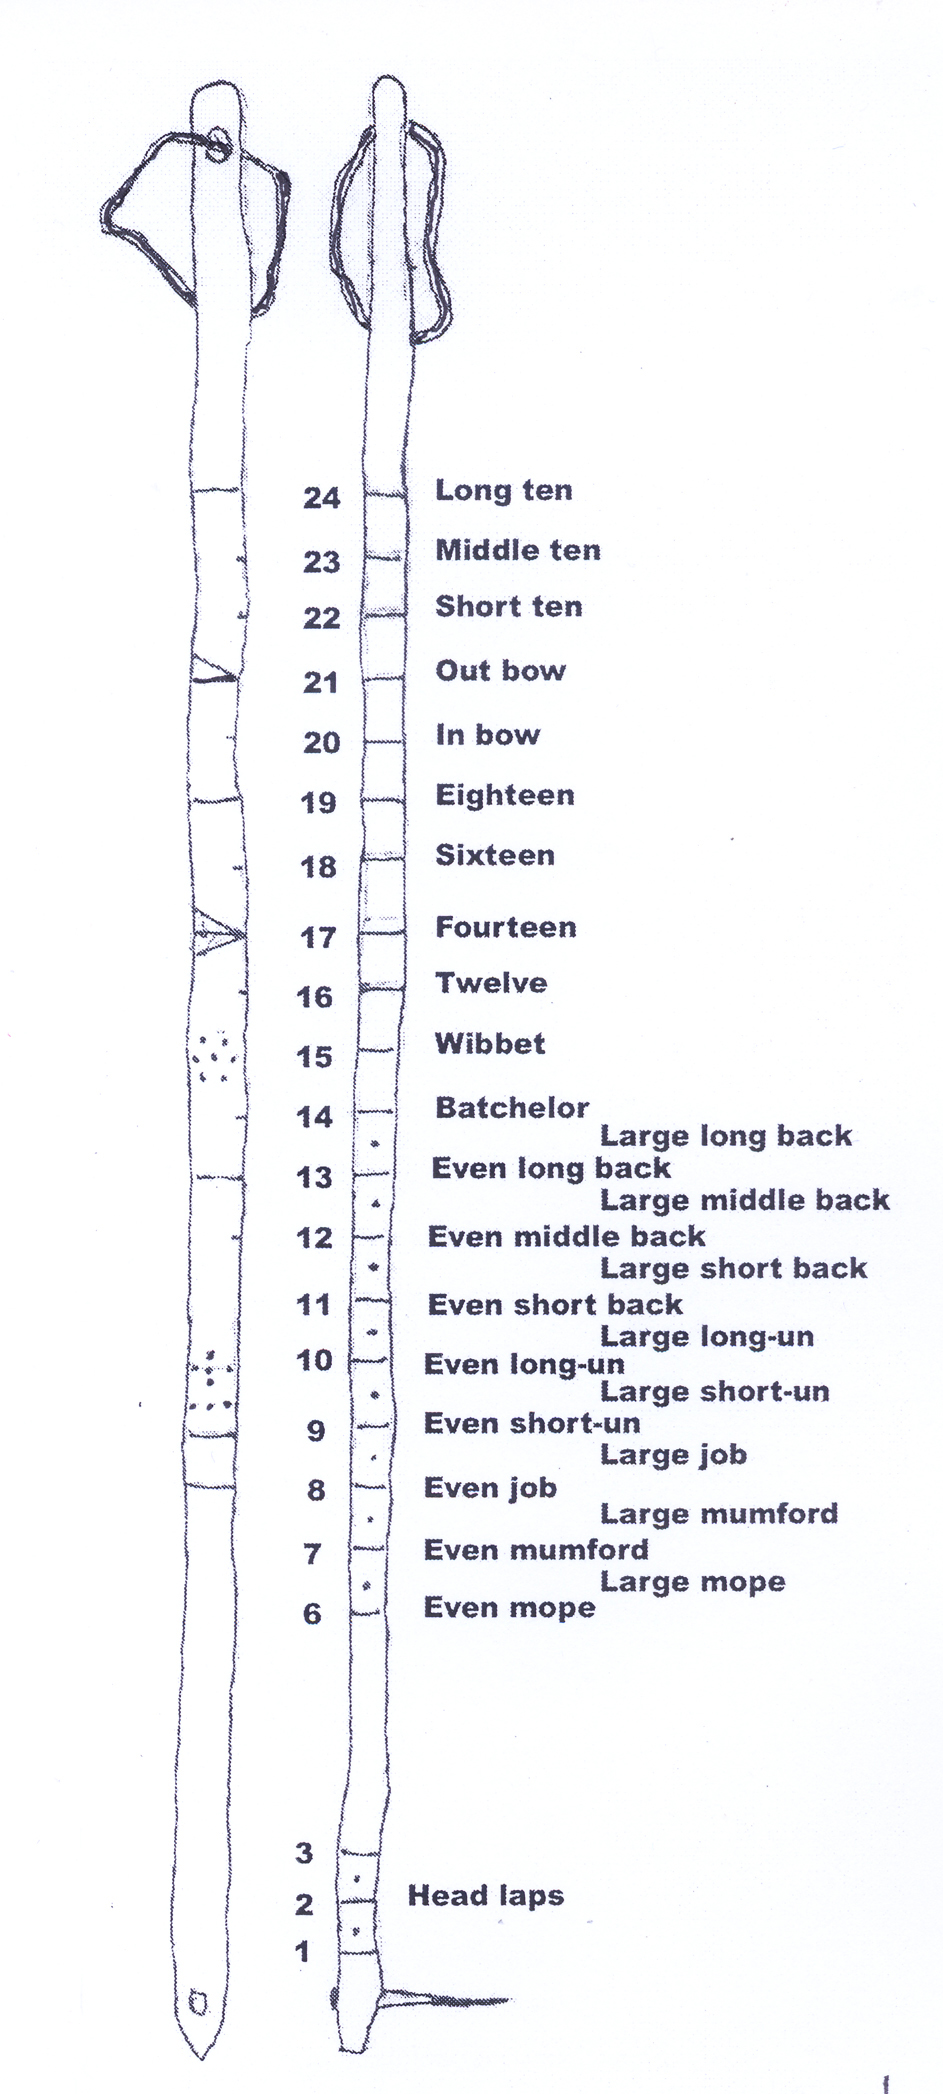 David ellis's Collyweston stick marks and names